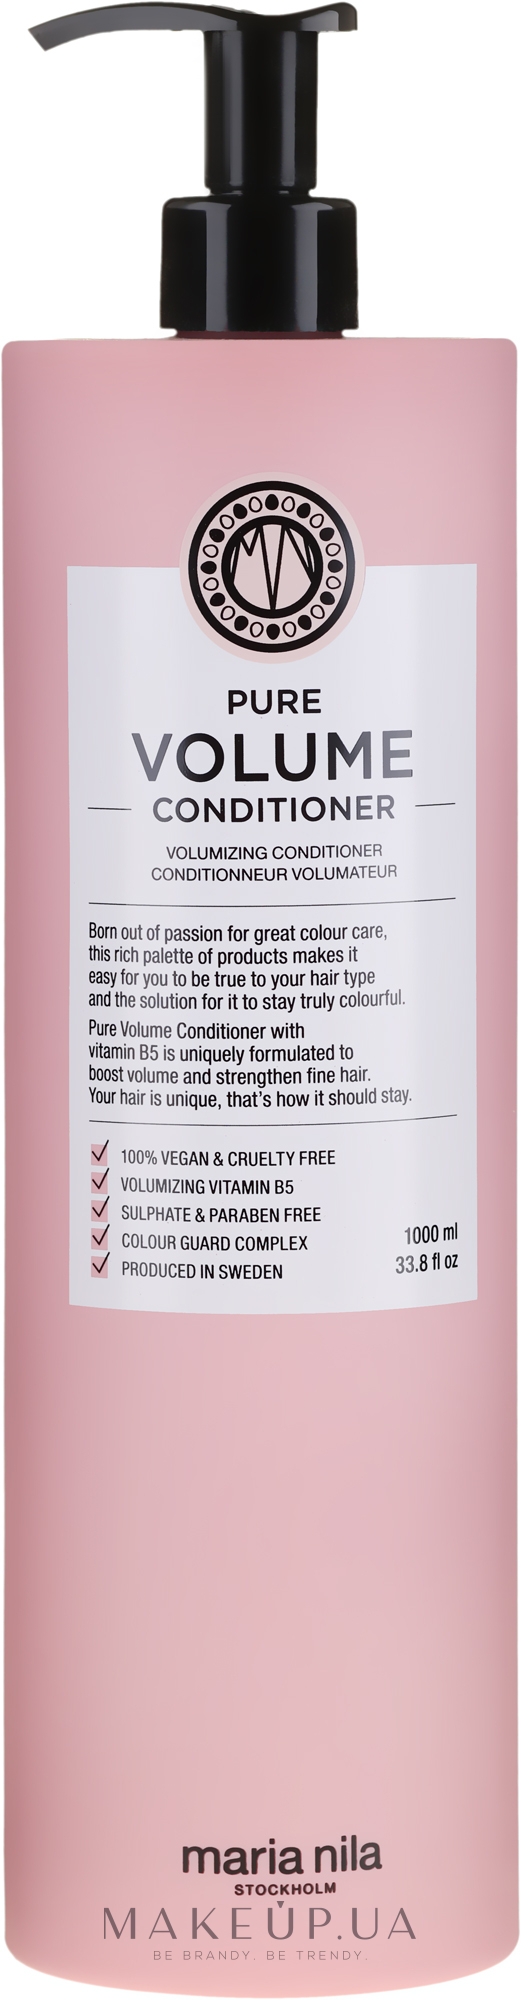 Кондиционер для придания объёма волосам - Maria Nila Pure Volume Condtioner  — фото 1000ml